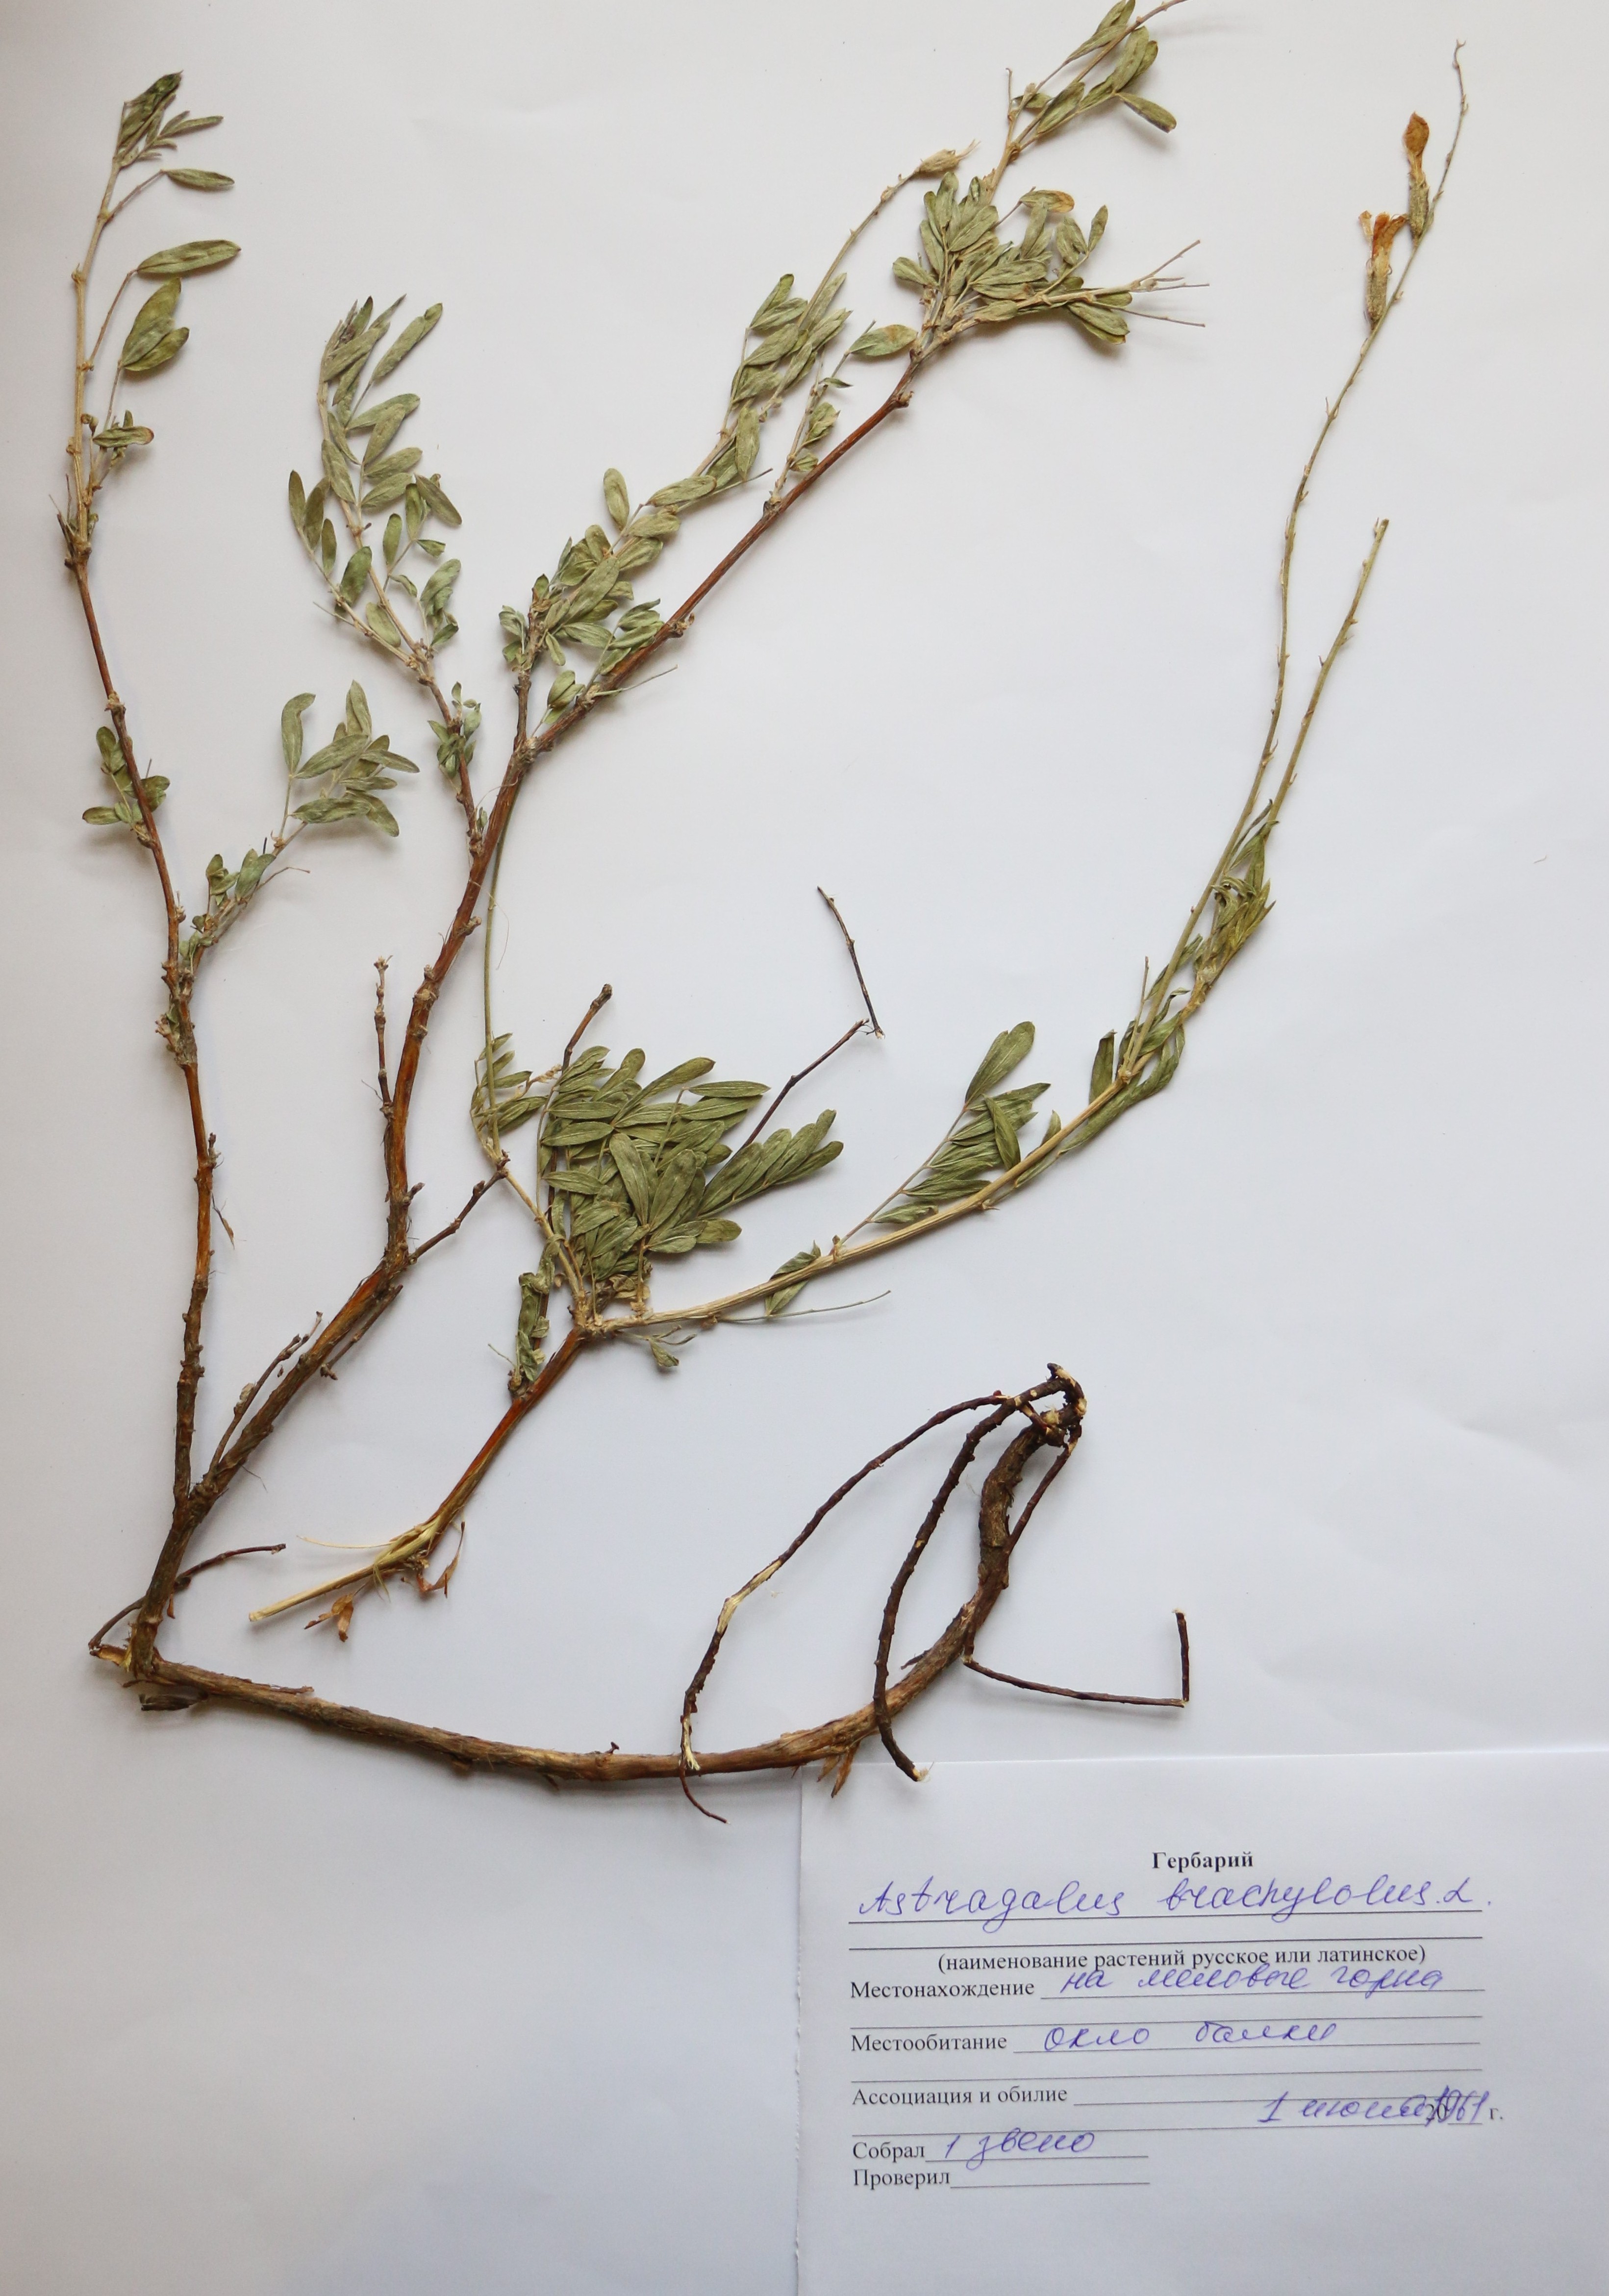 Astragalus  brachylobus D. C. - Астрагал коротколопастной - Қысқабұршақ таспа